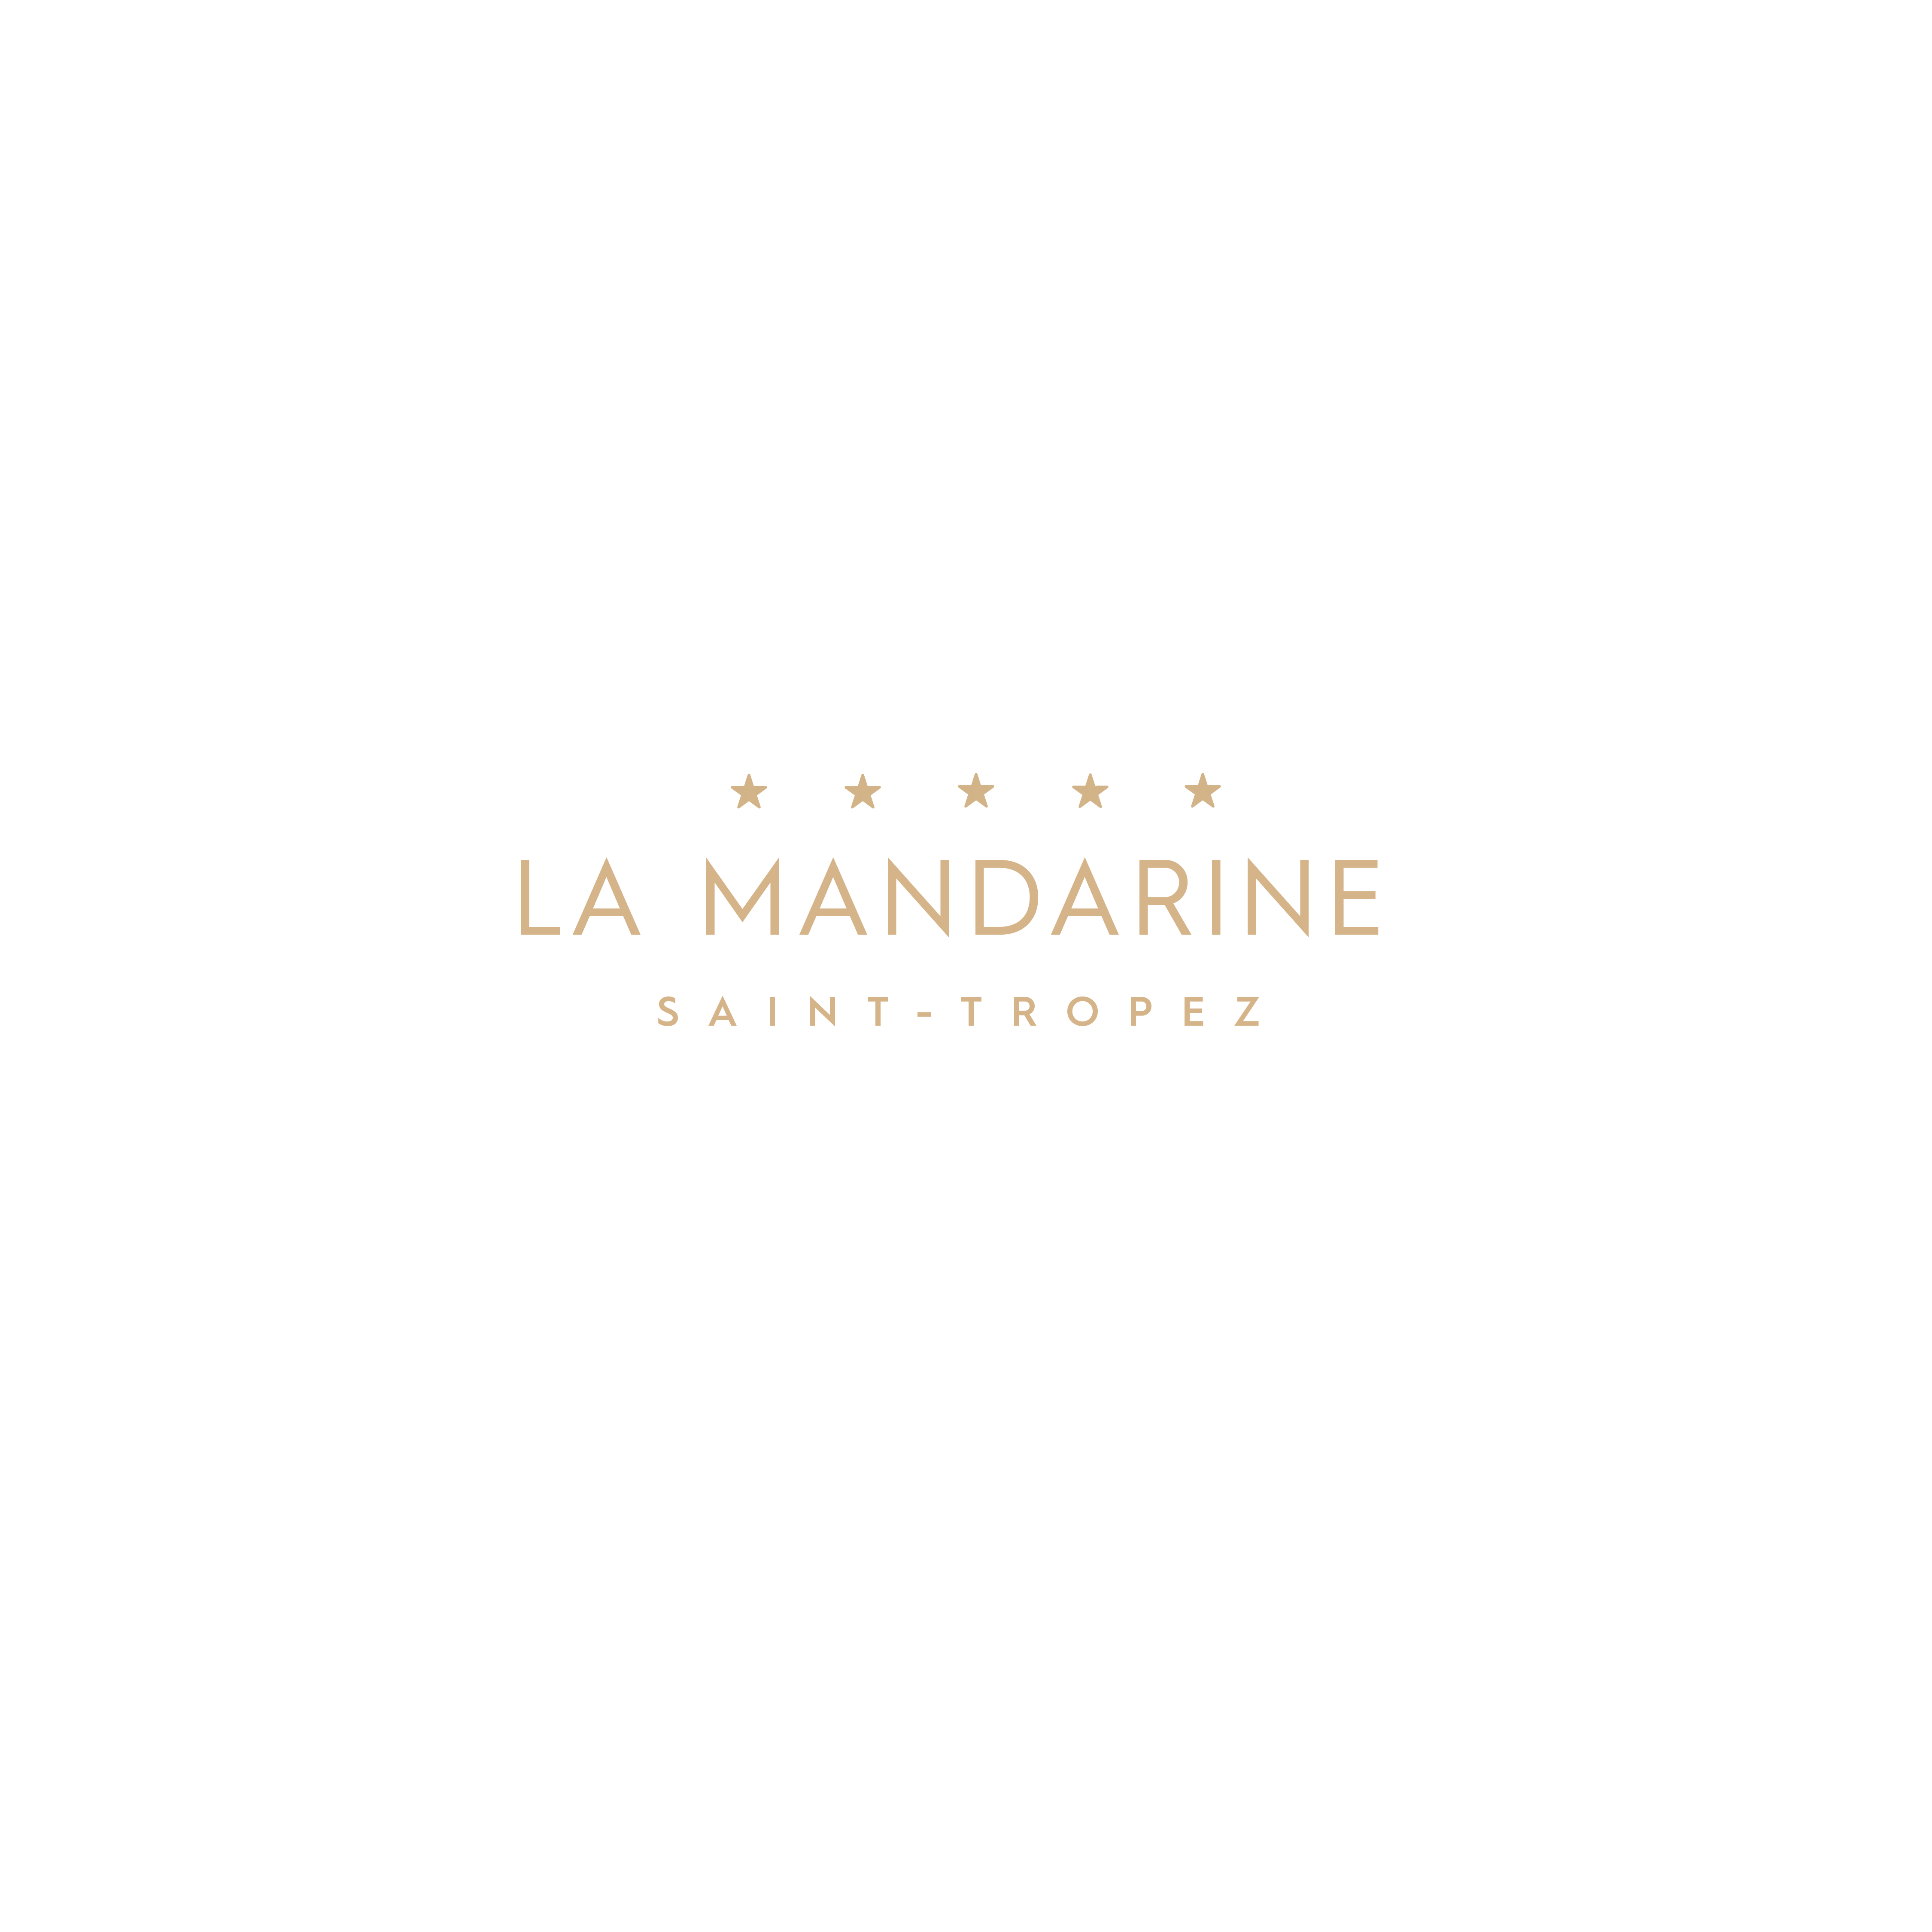  Logo Restaurant de La Mandarine